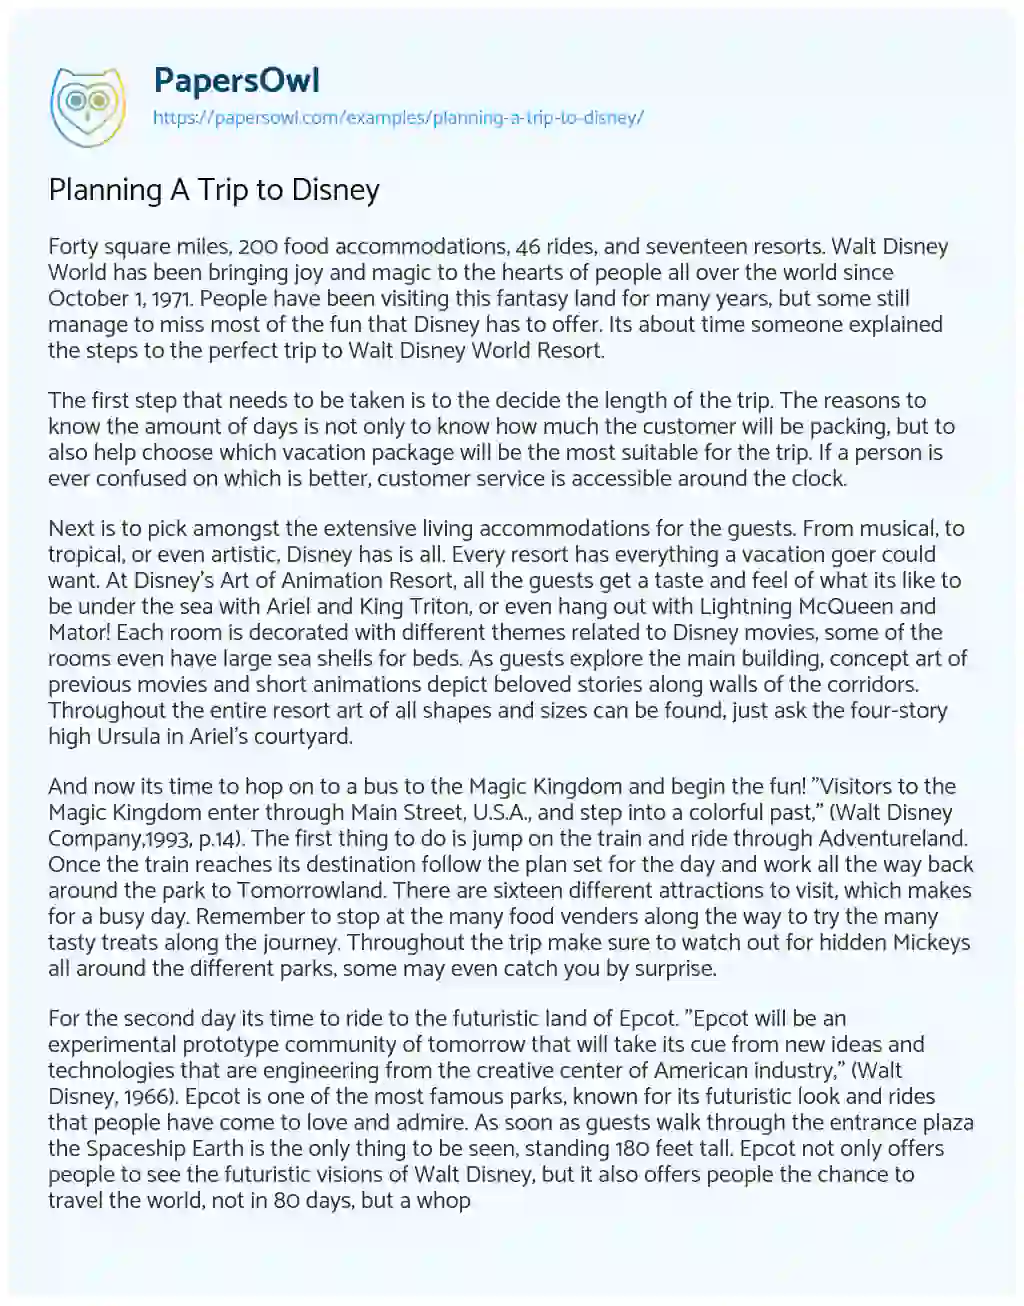 Essay on Planning a Trip to Disney